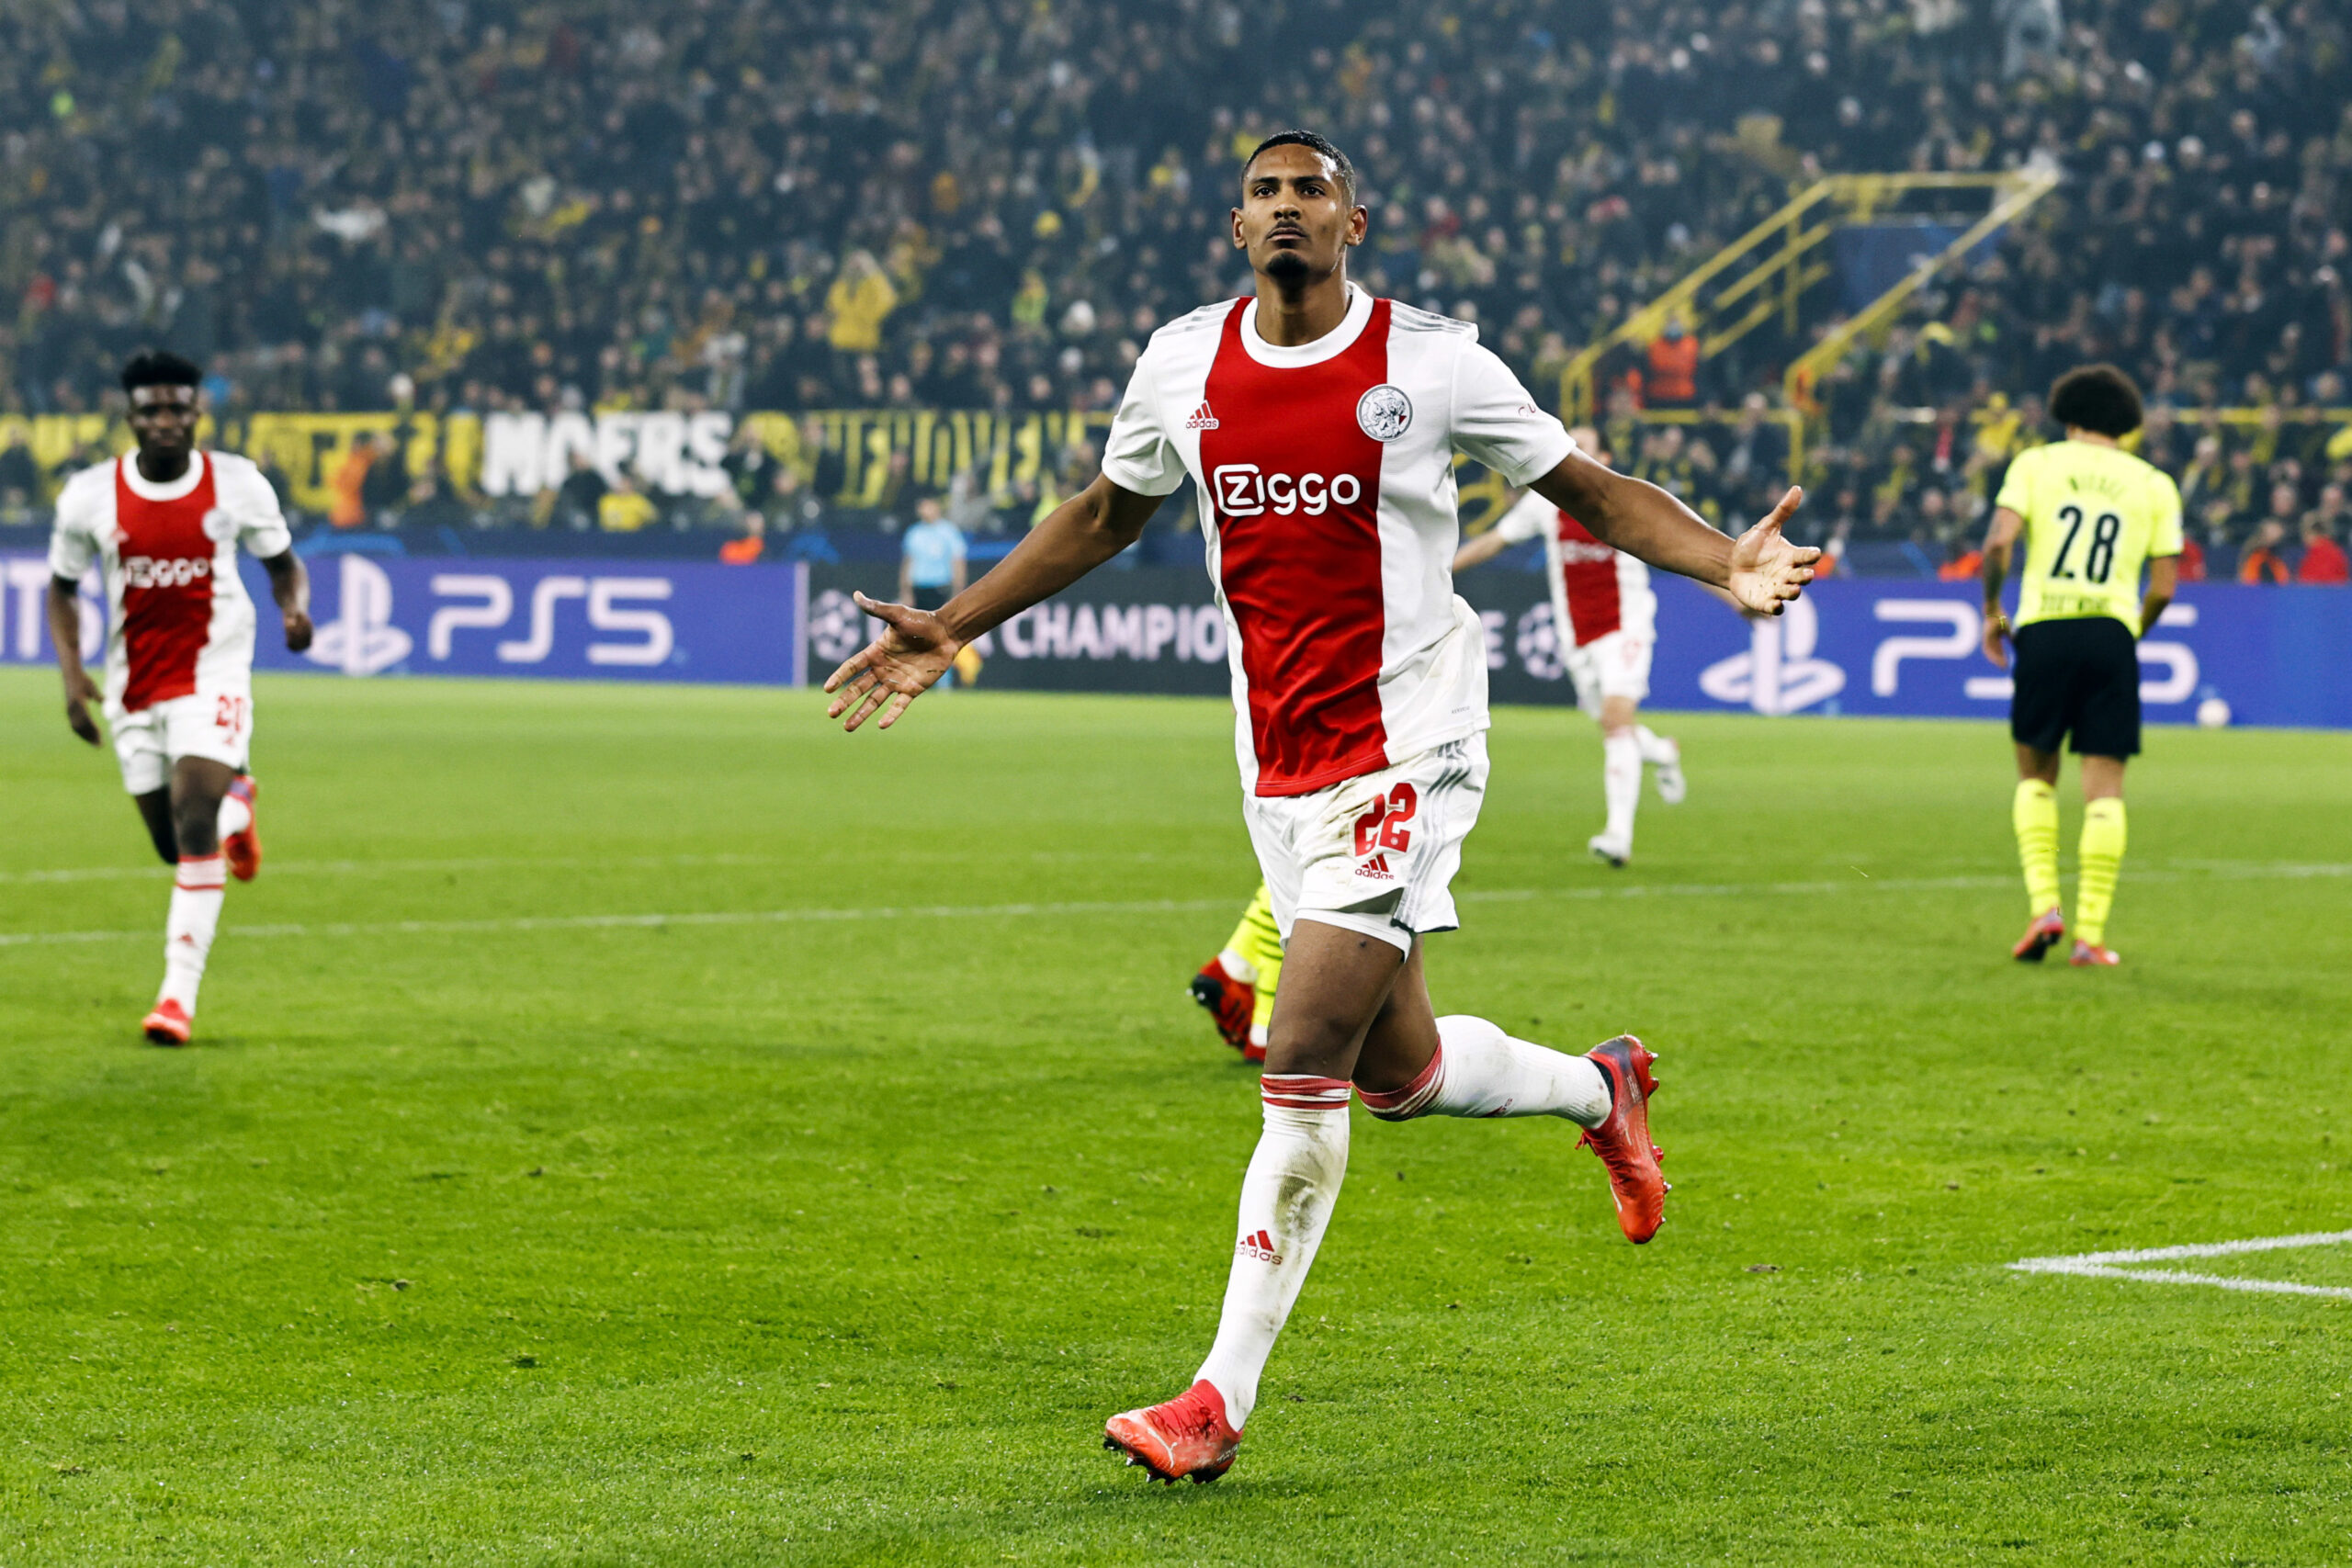 L’Ajax s’impose au forceps à Dortmund et se qualifie